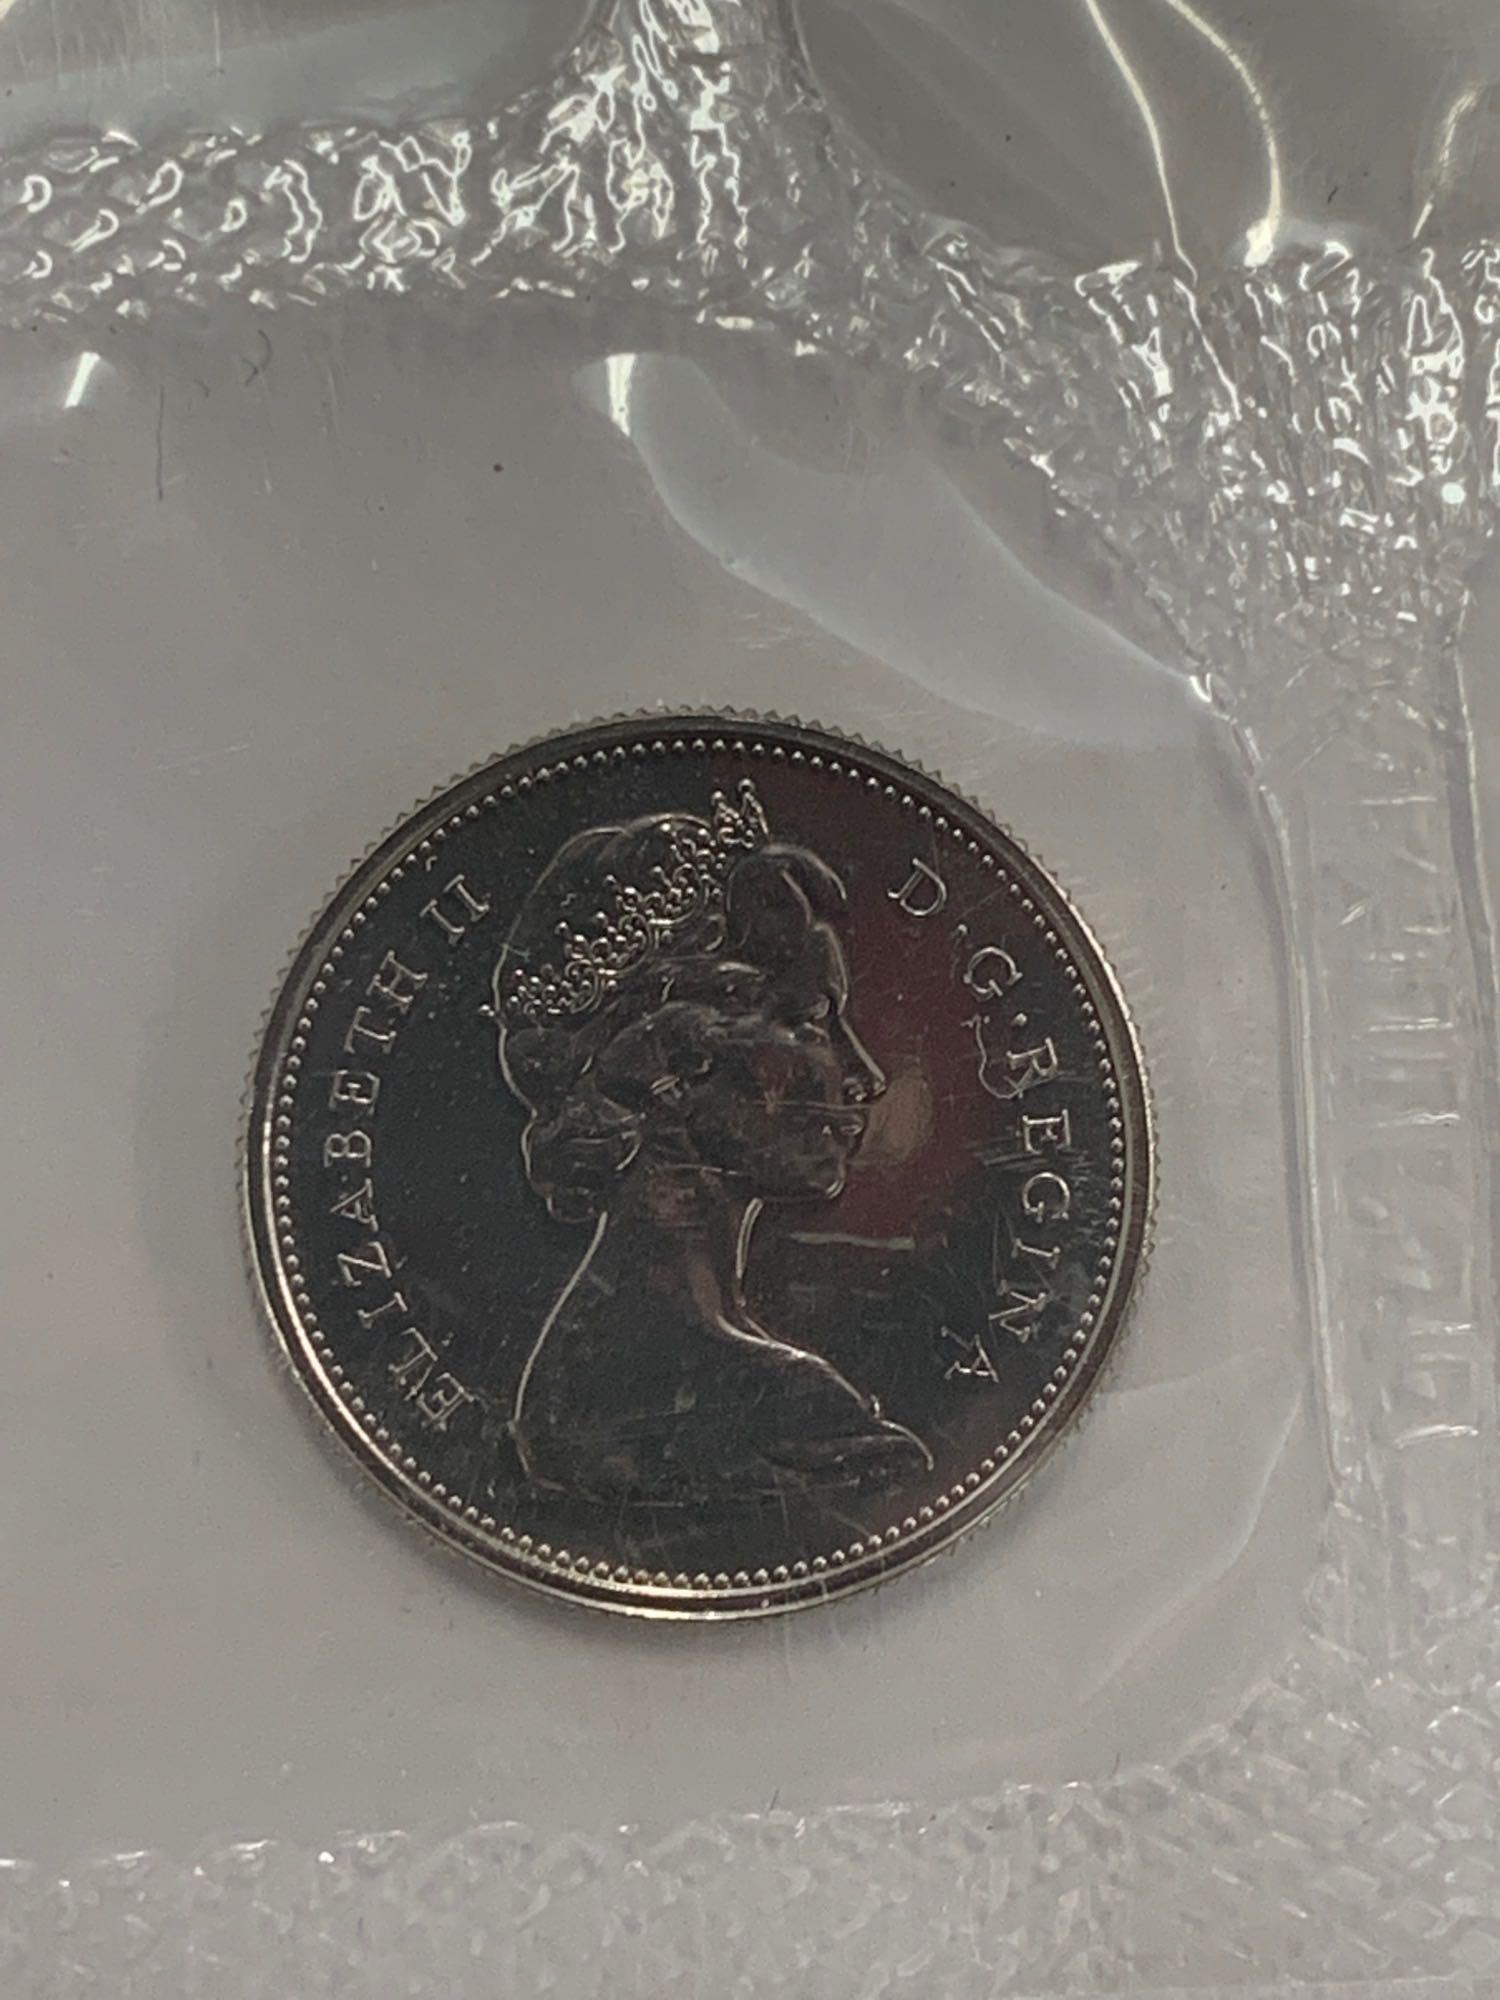 Royal Canadian Mint proof set